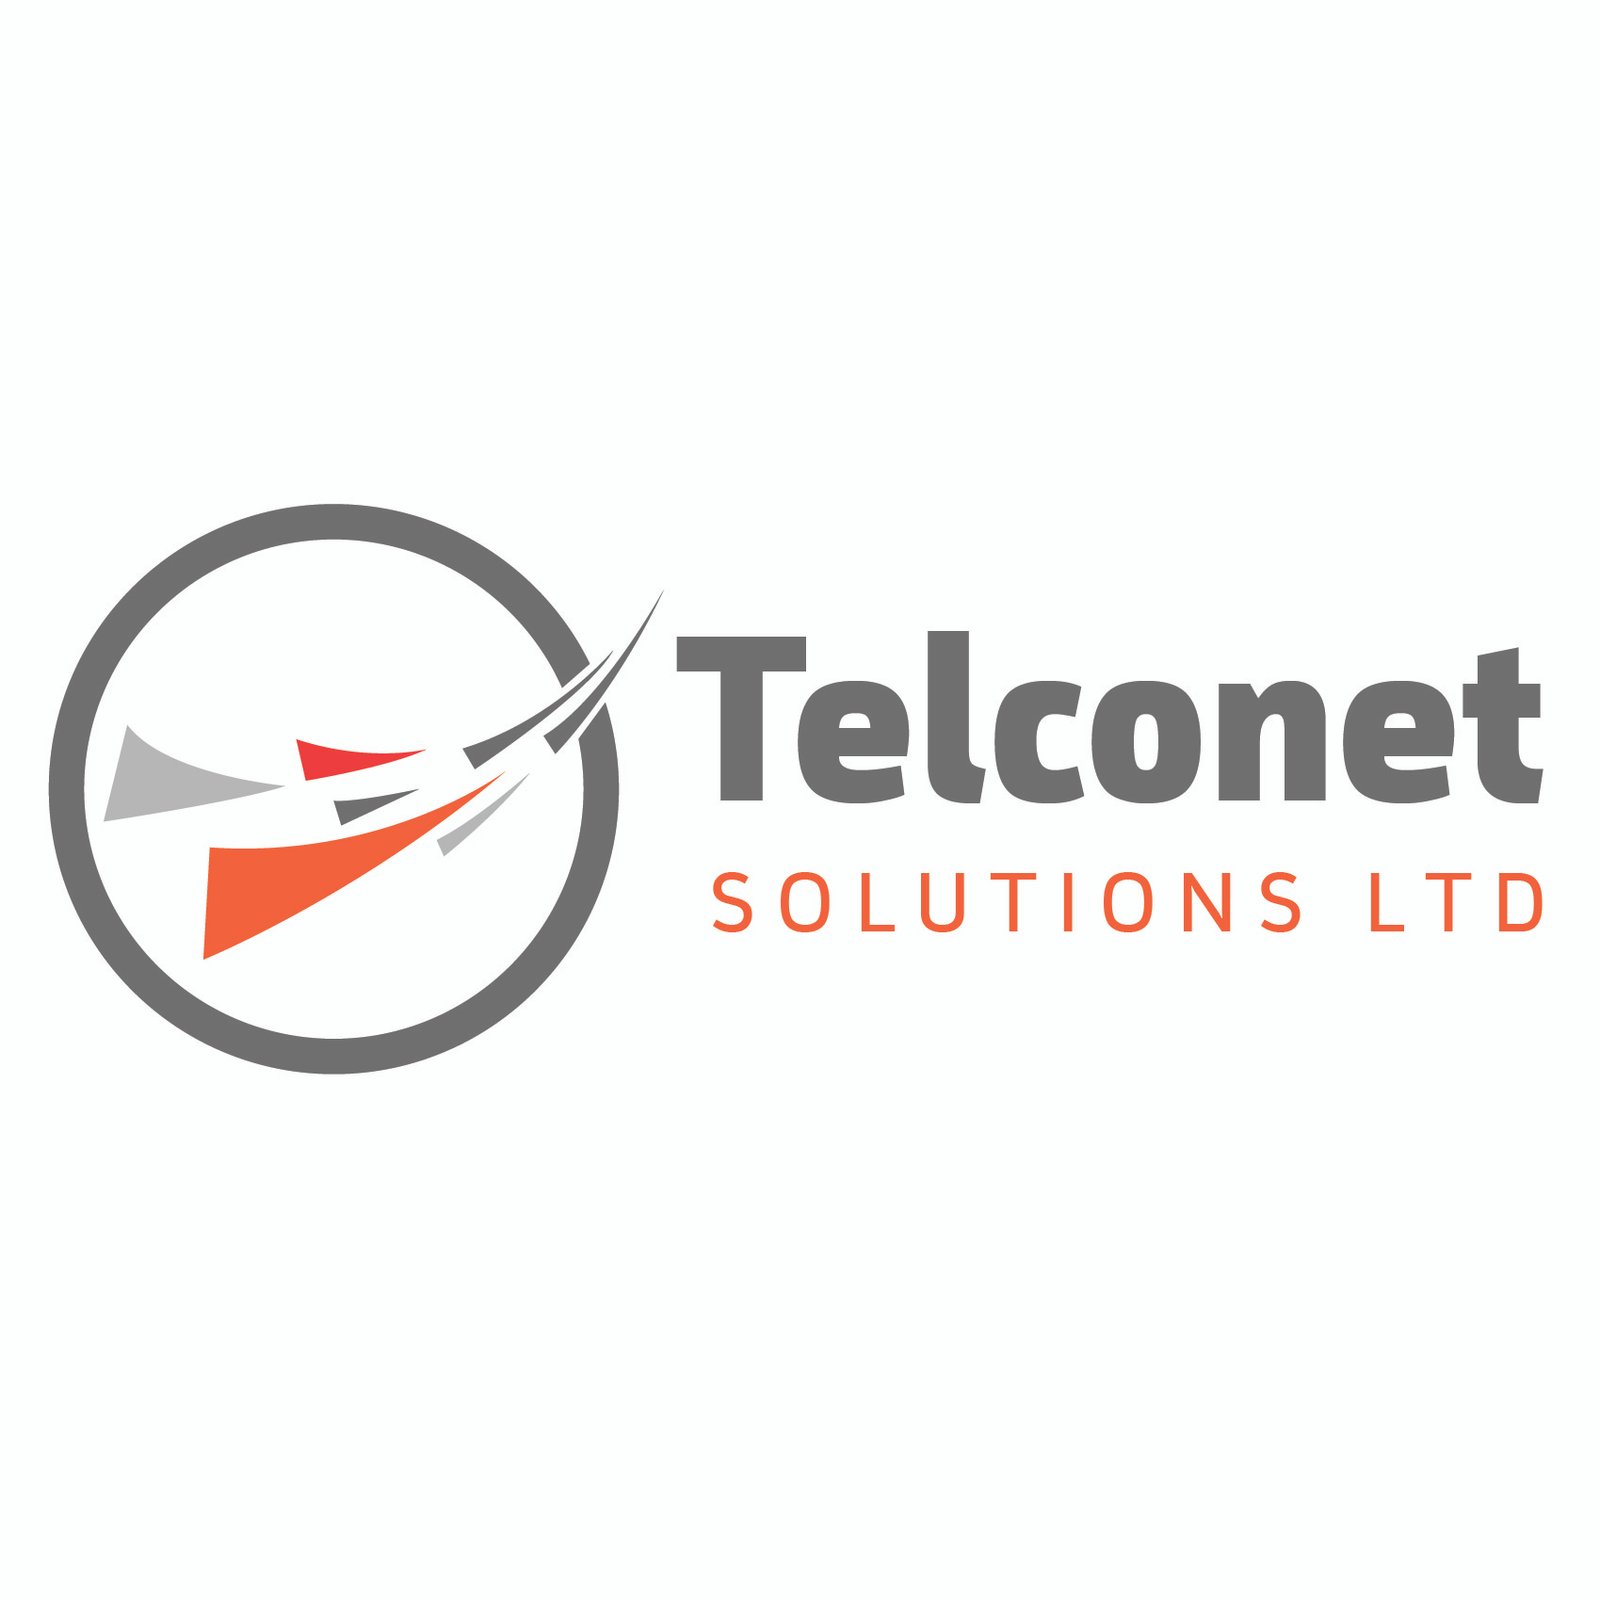 Telconet_Solutions_Ltd_Final_logo2-01.jpg